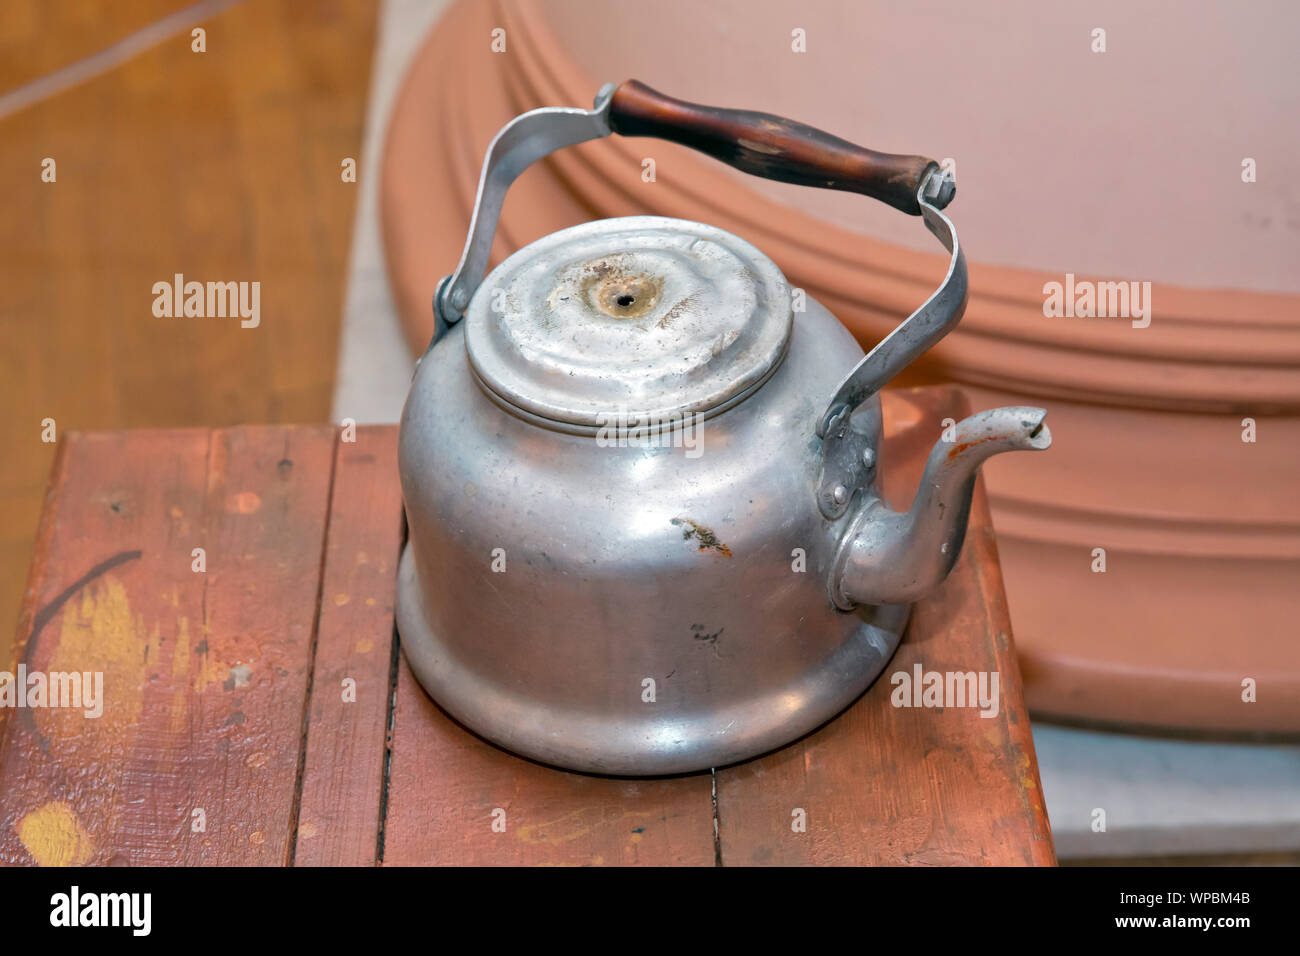 https://c8.alamy.com/comp/WPBM4B/an-old-slightly-damaged-aluminum-kettle-old-fashioned-aluminum-kettle-top-large-tea-pot-kettle-aluminum-old-aluminum-tea-kettle-with-lid-WPBM4B.jpg